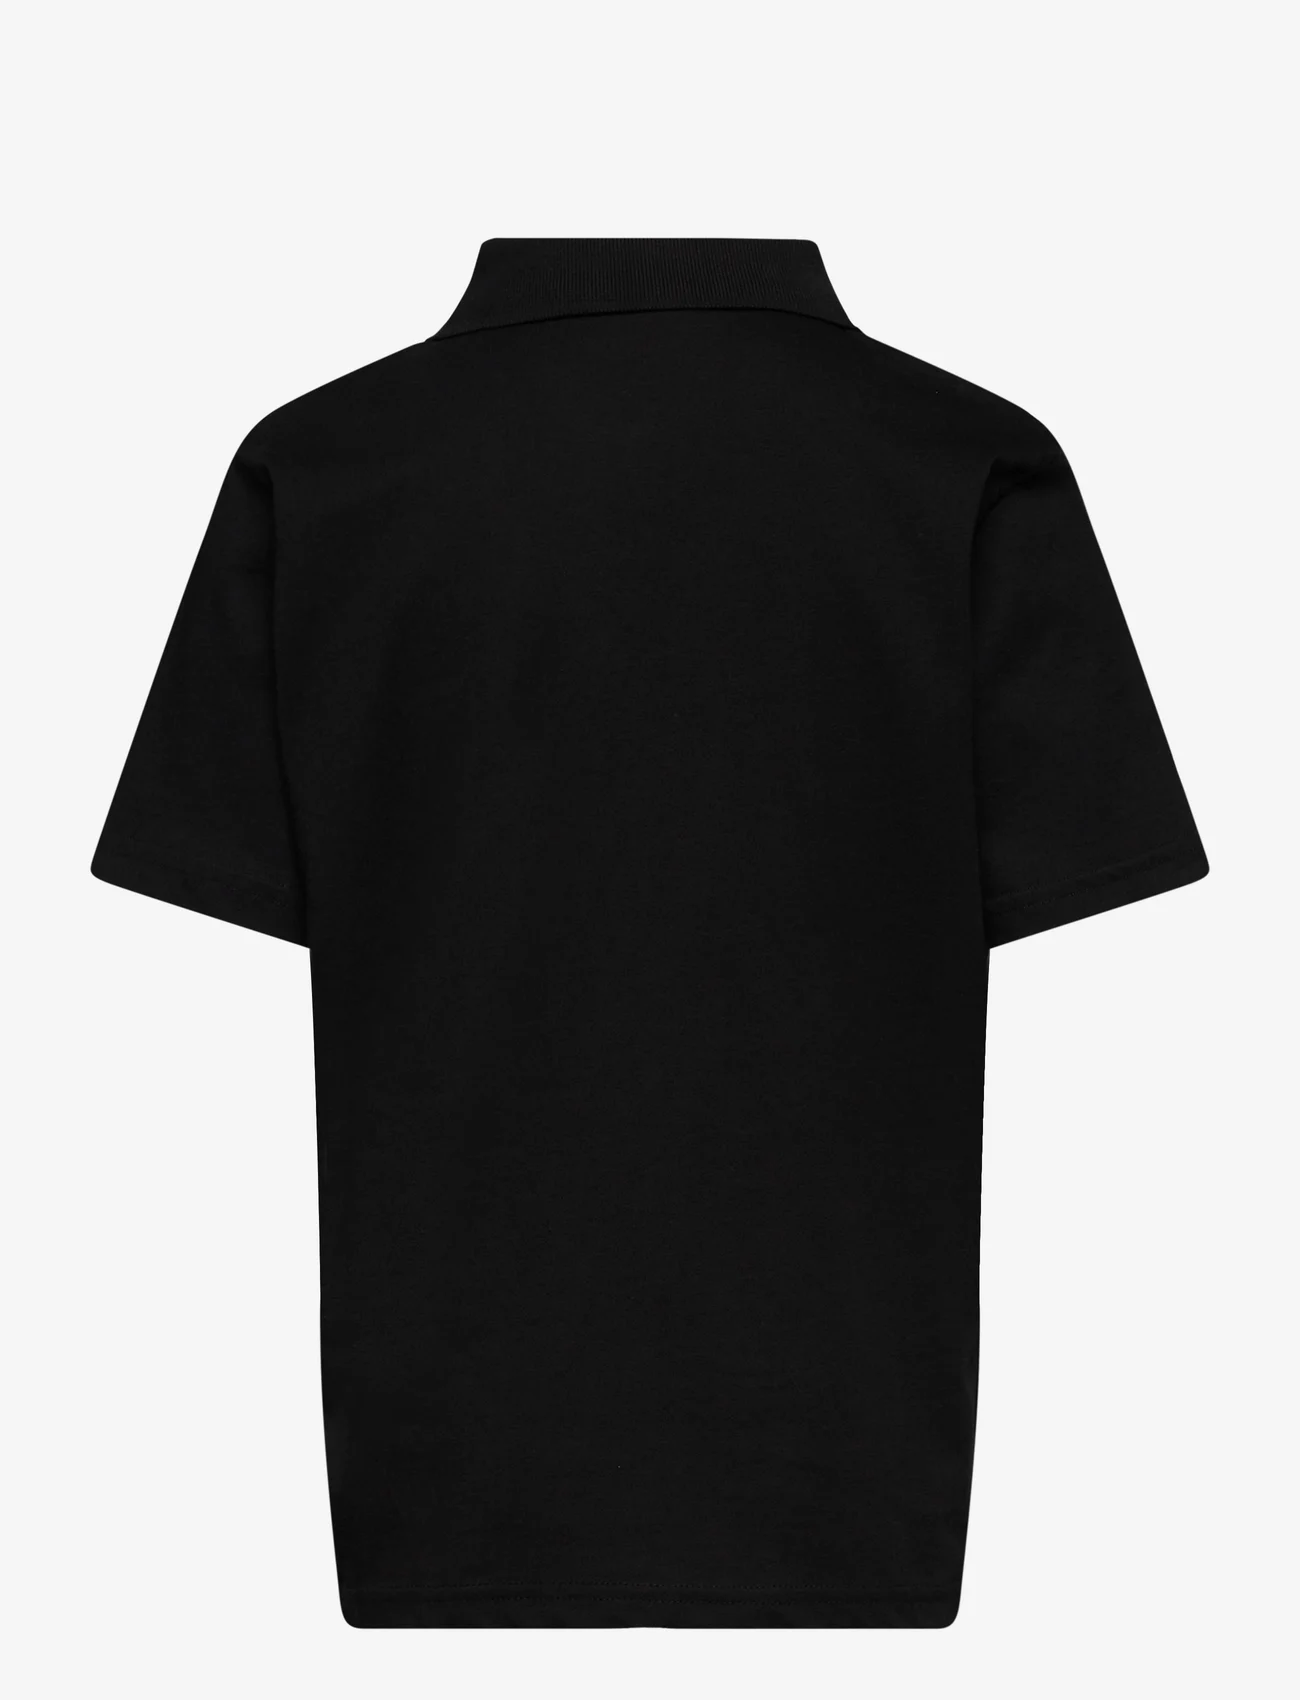 FILA - BLEKENDORF - polo shirts - black - 1